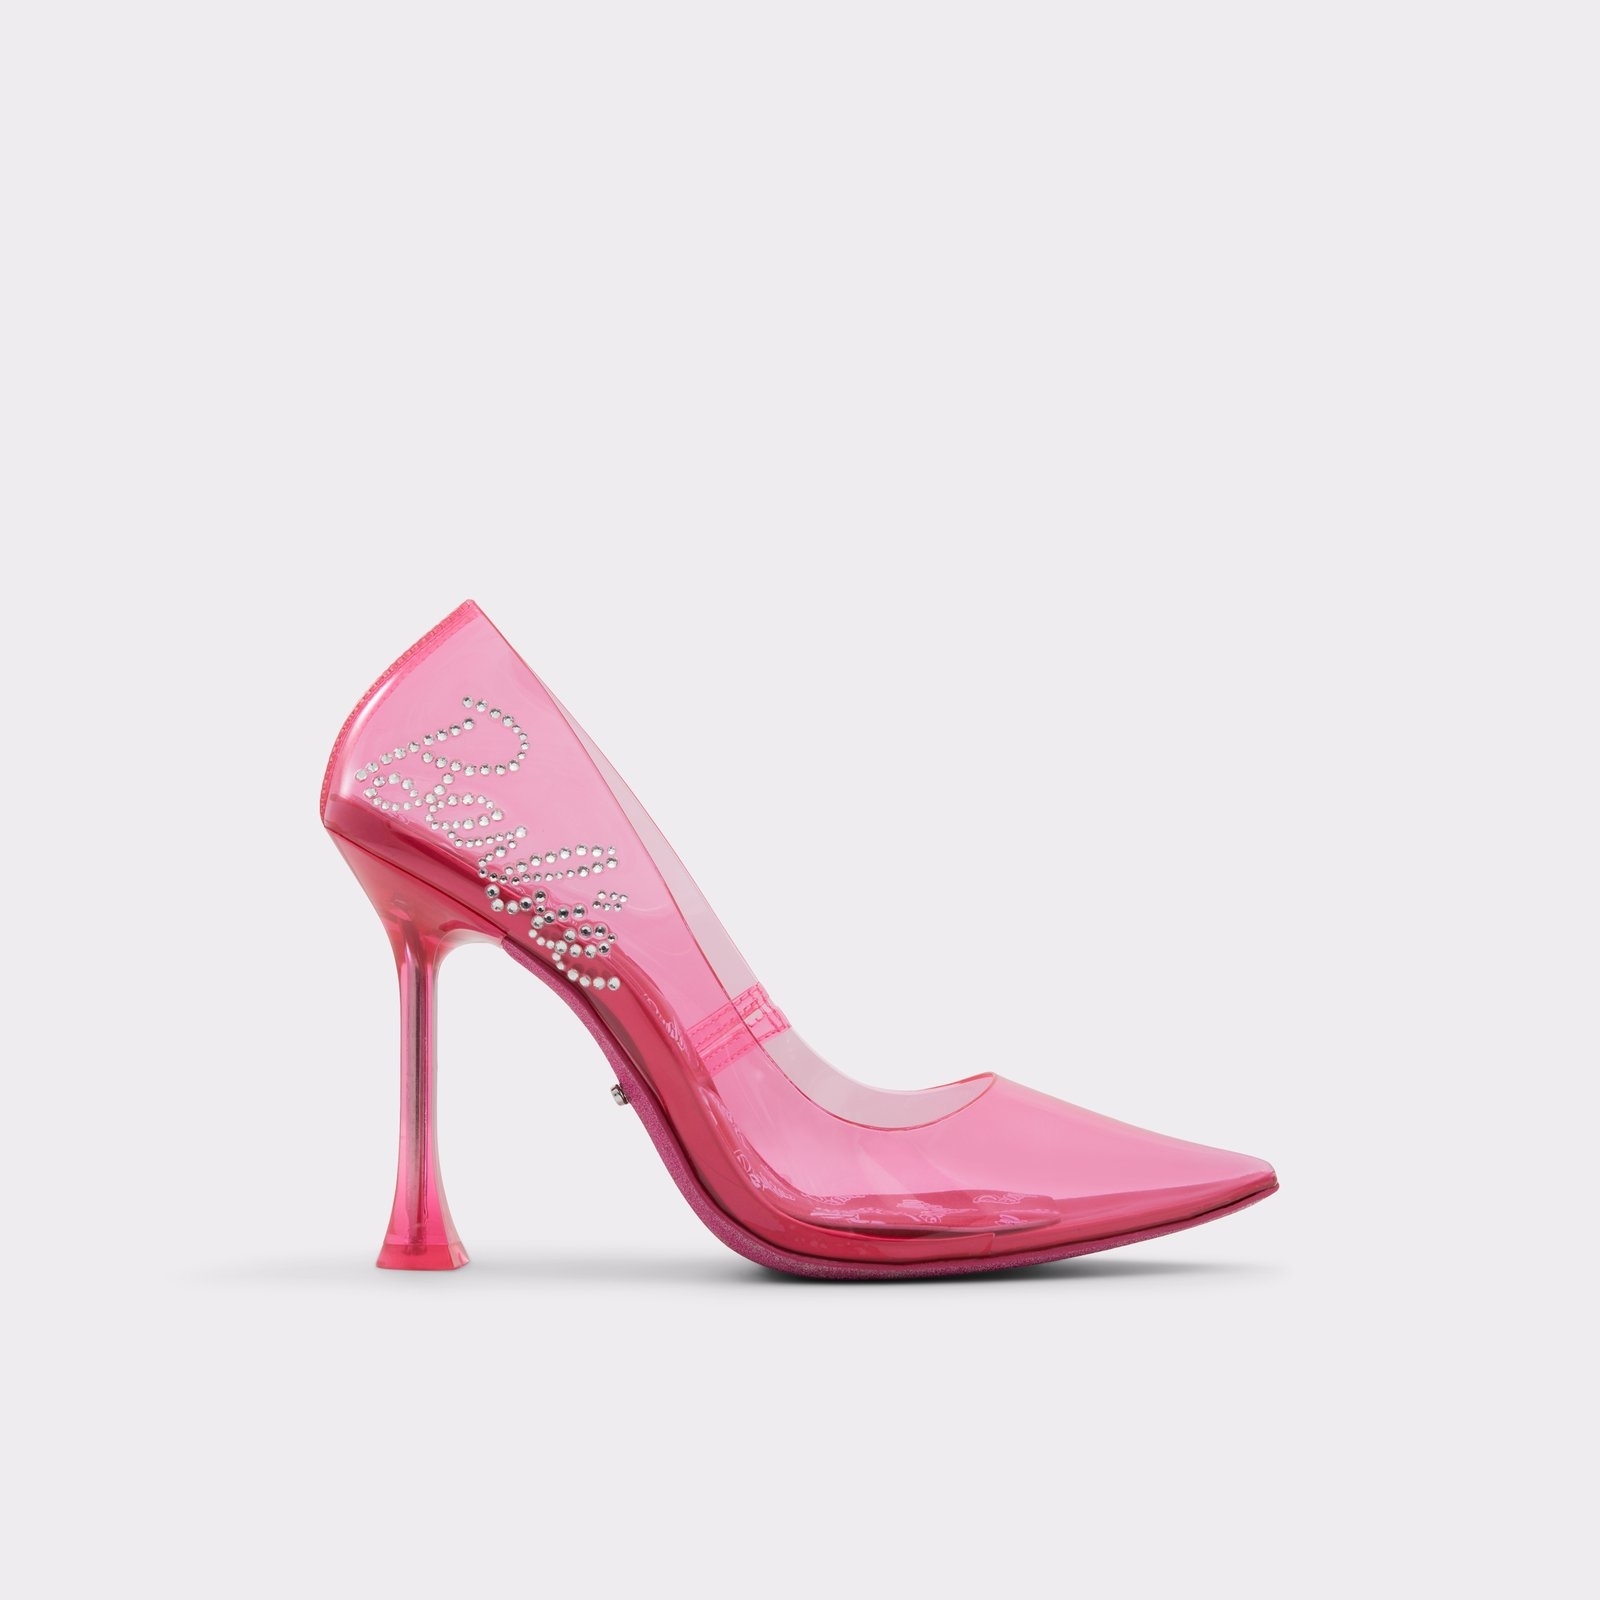 Aldo Barbie shoe